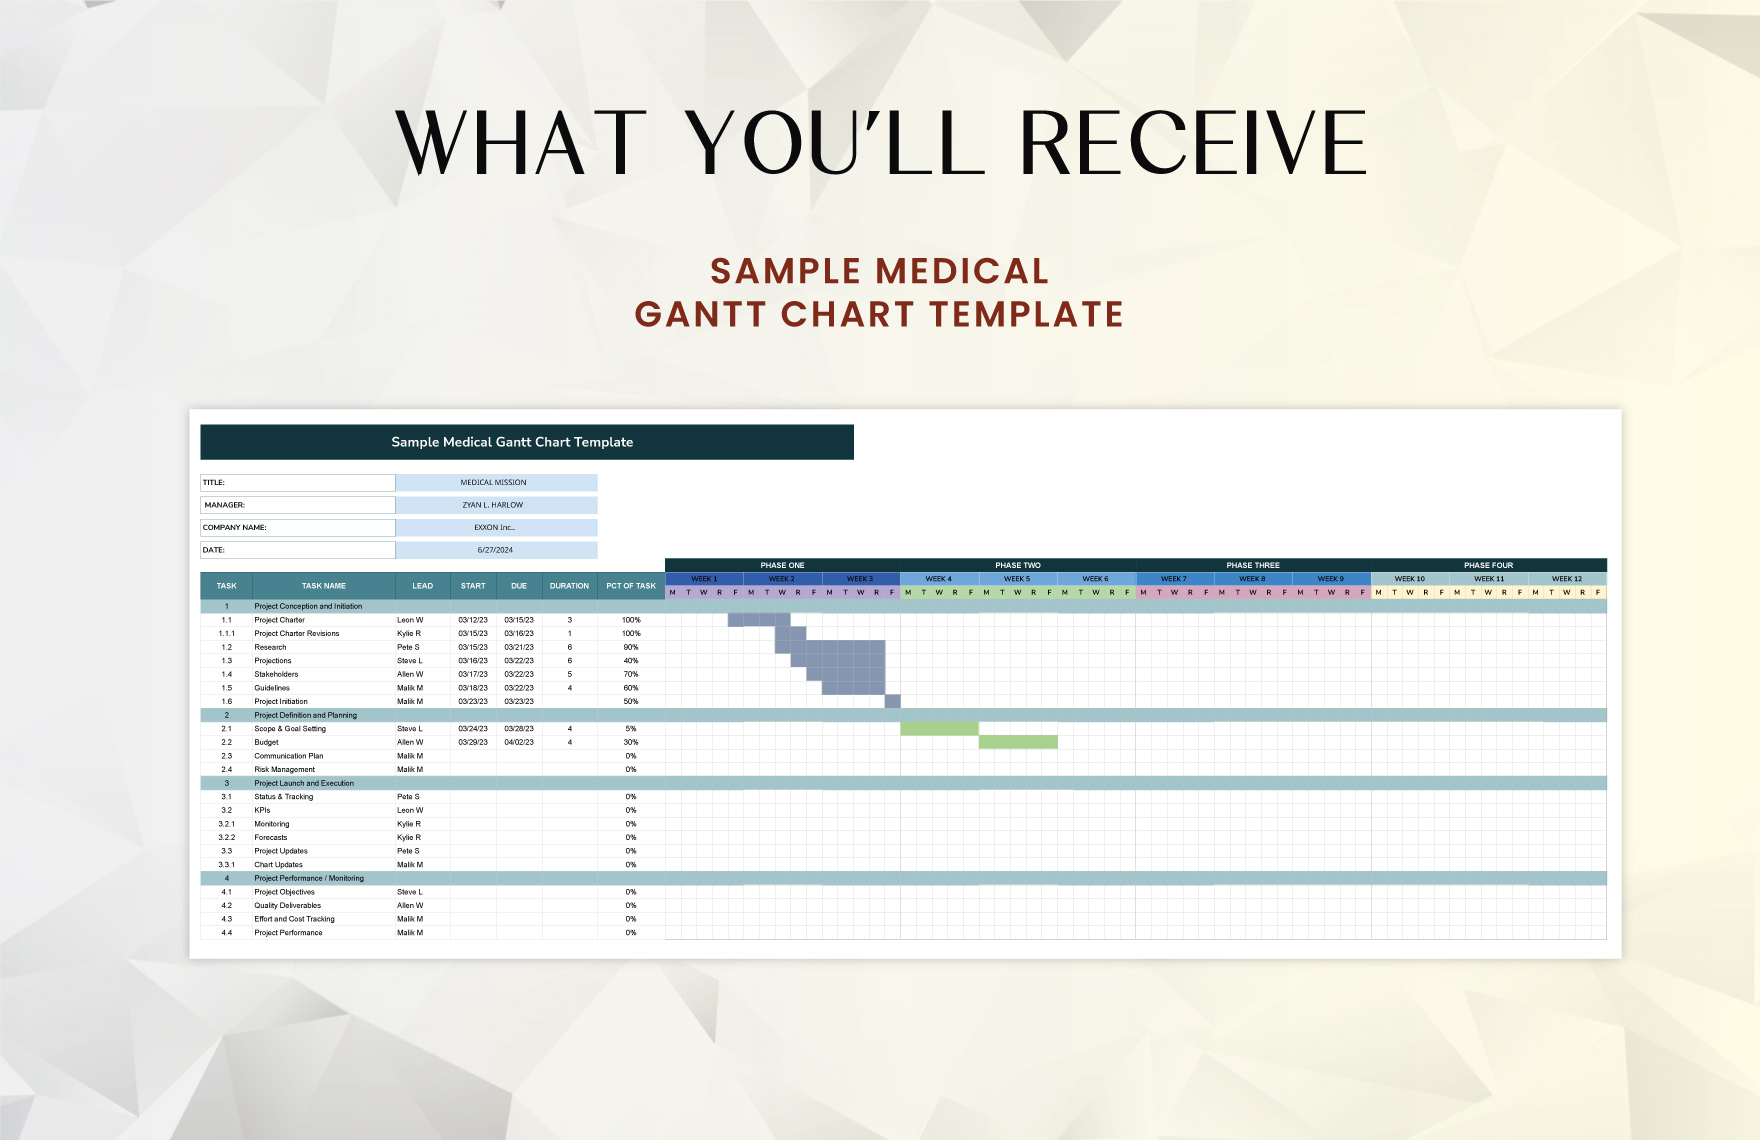 Sample Medical Gantt Chart Template